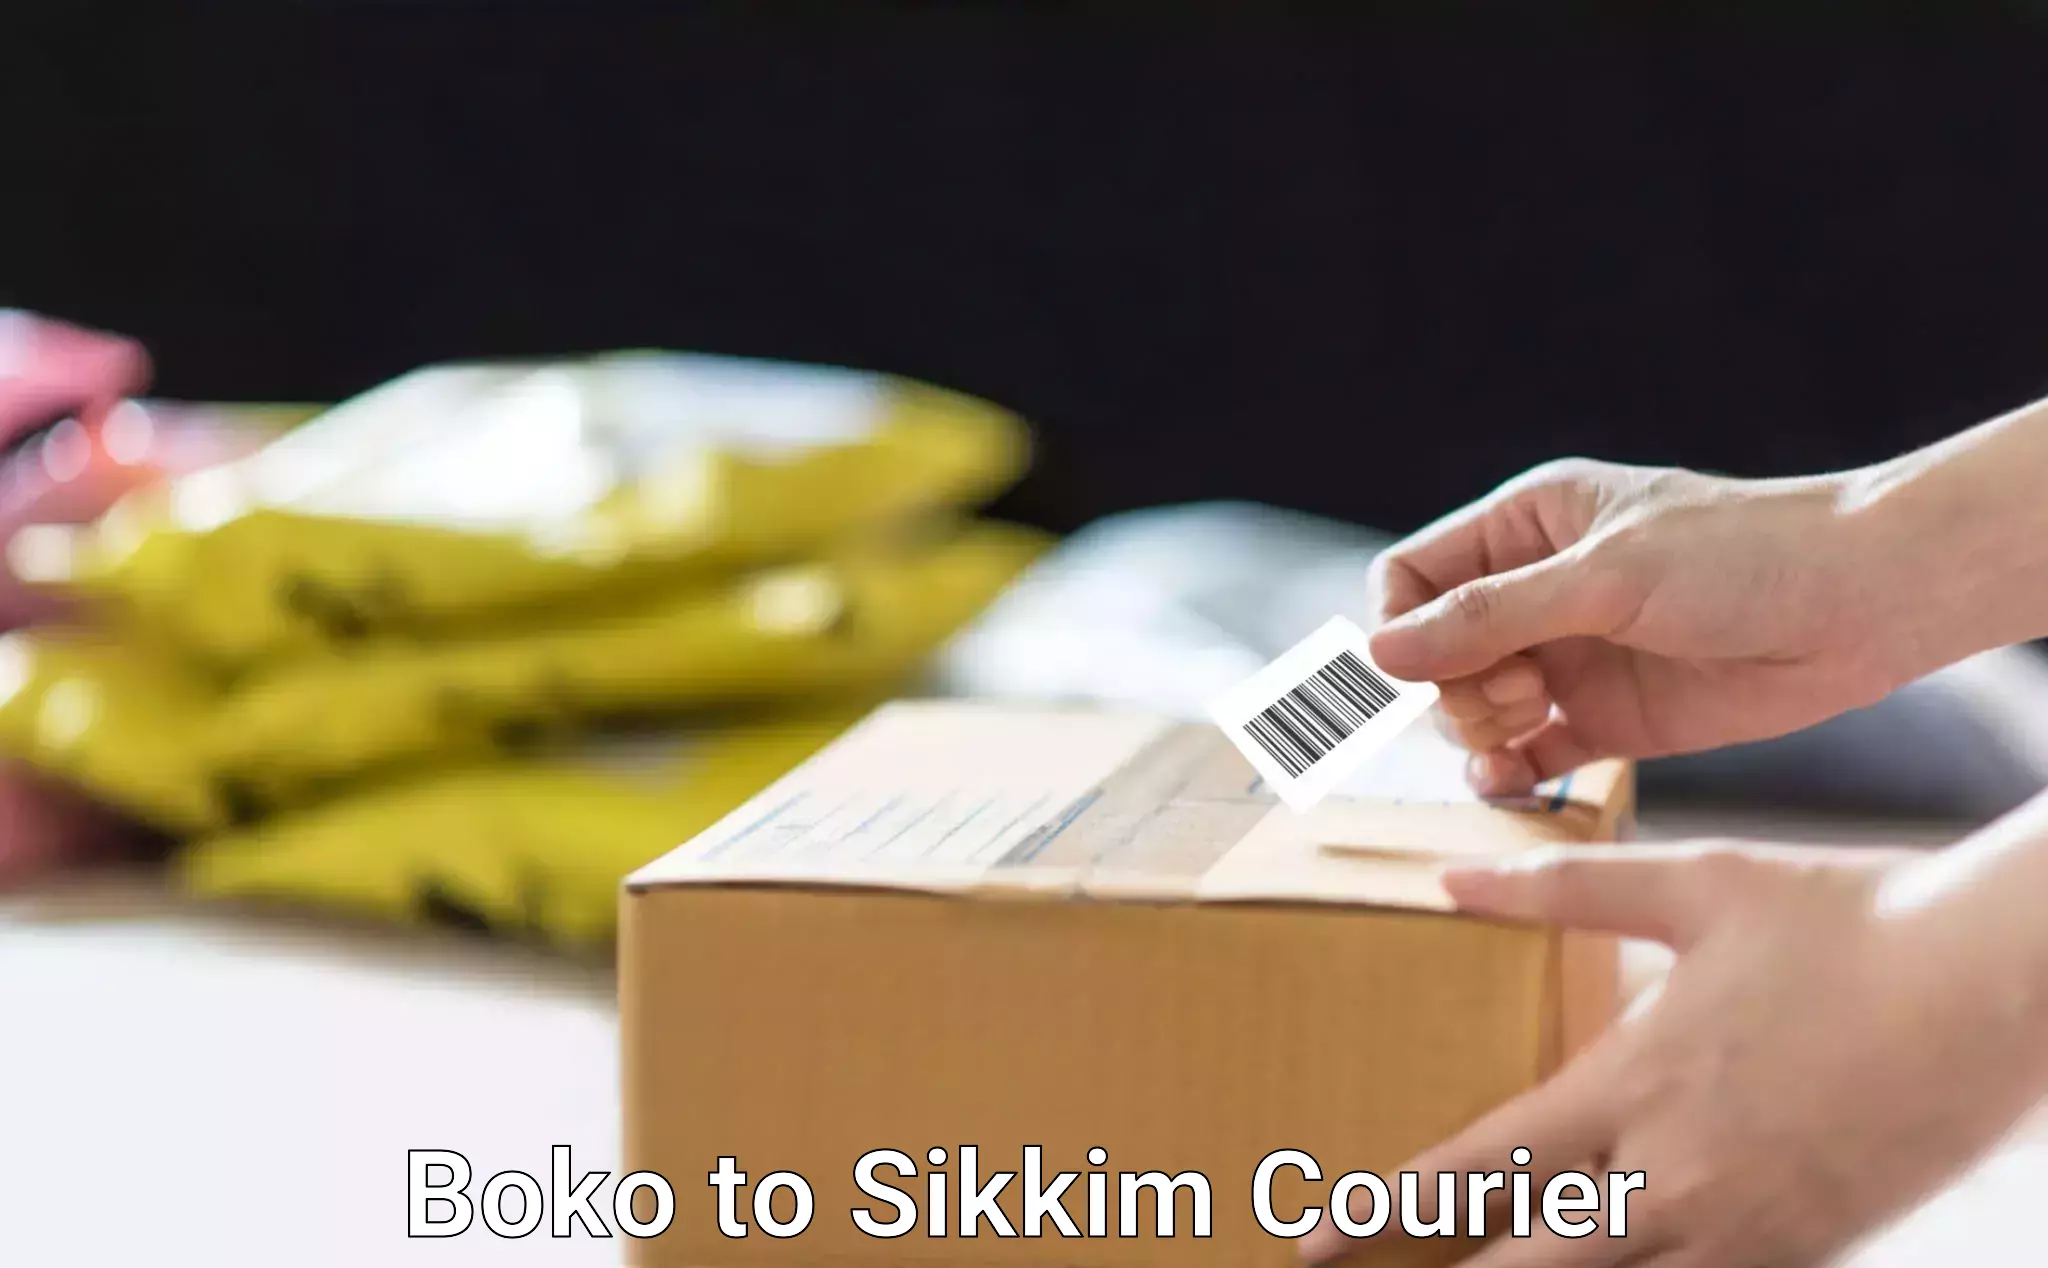 International parcel service Boko to North Sikkim